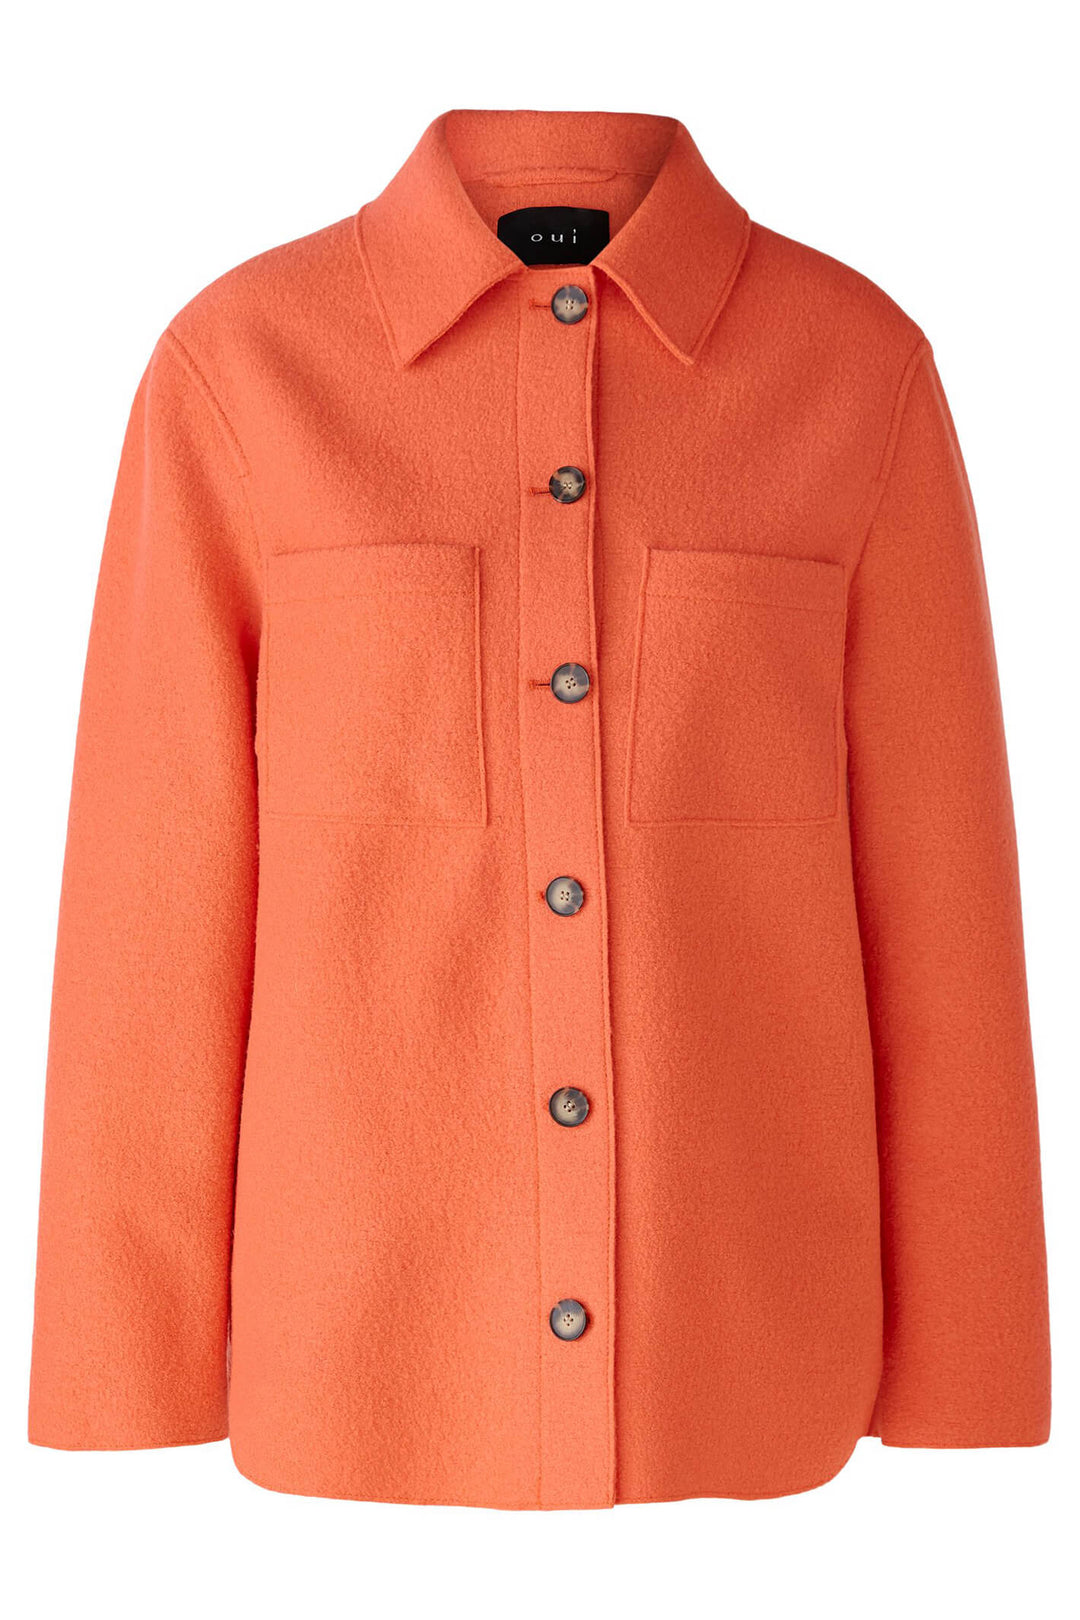 Oui 85802 Coral Button Front Jacket Shacket - Olivia Grace Fashion